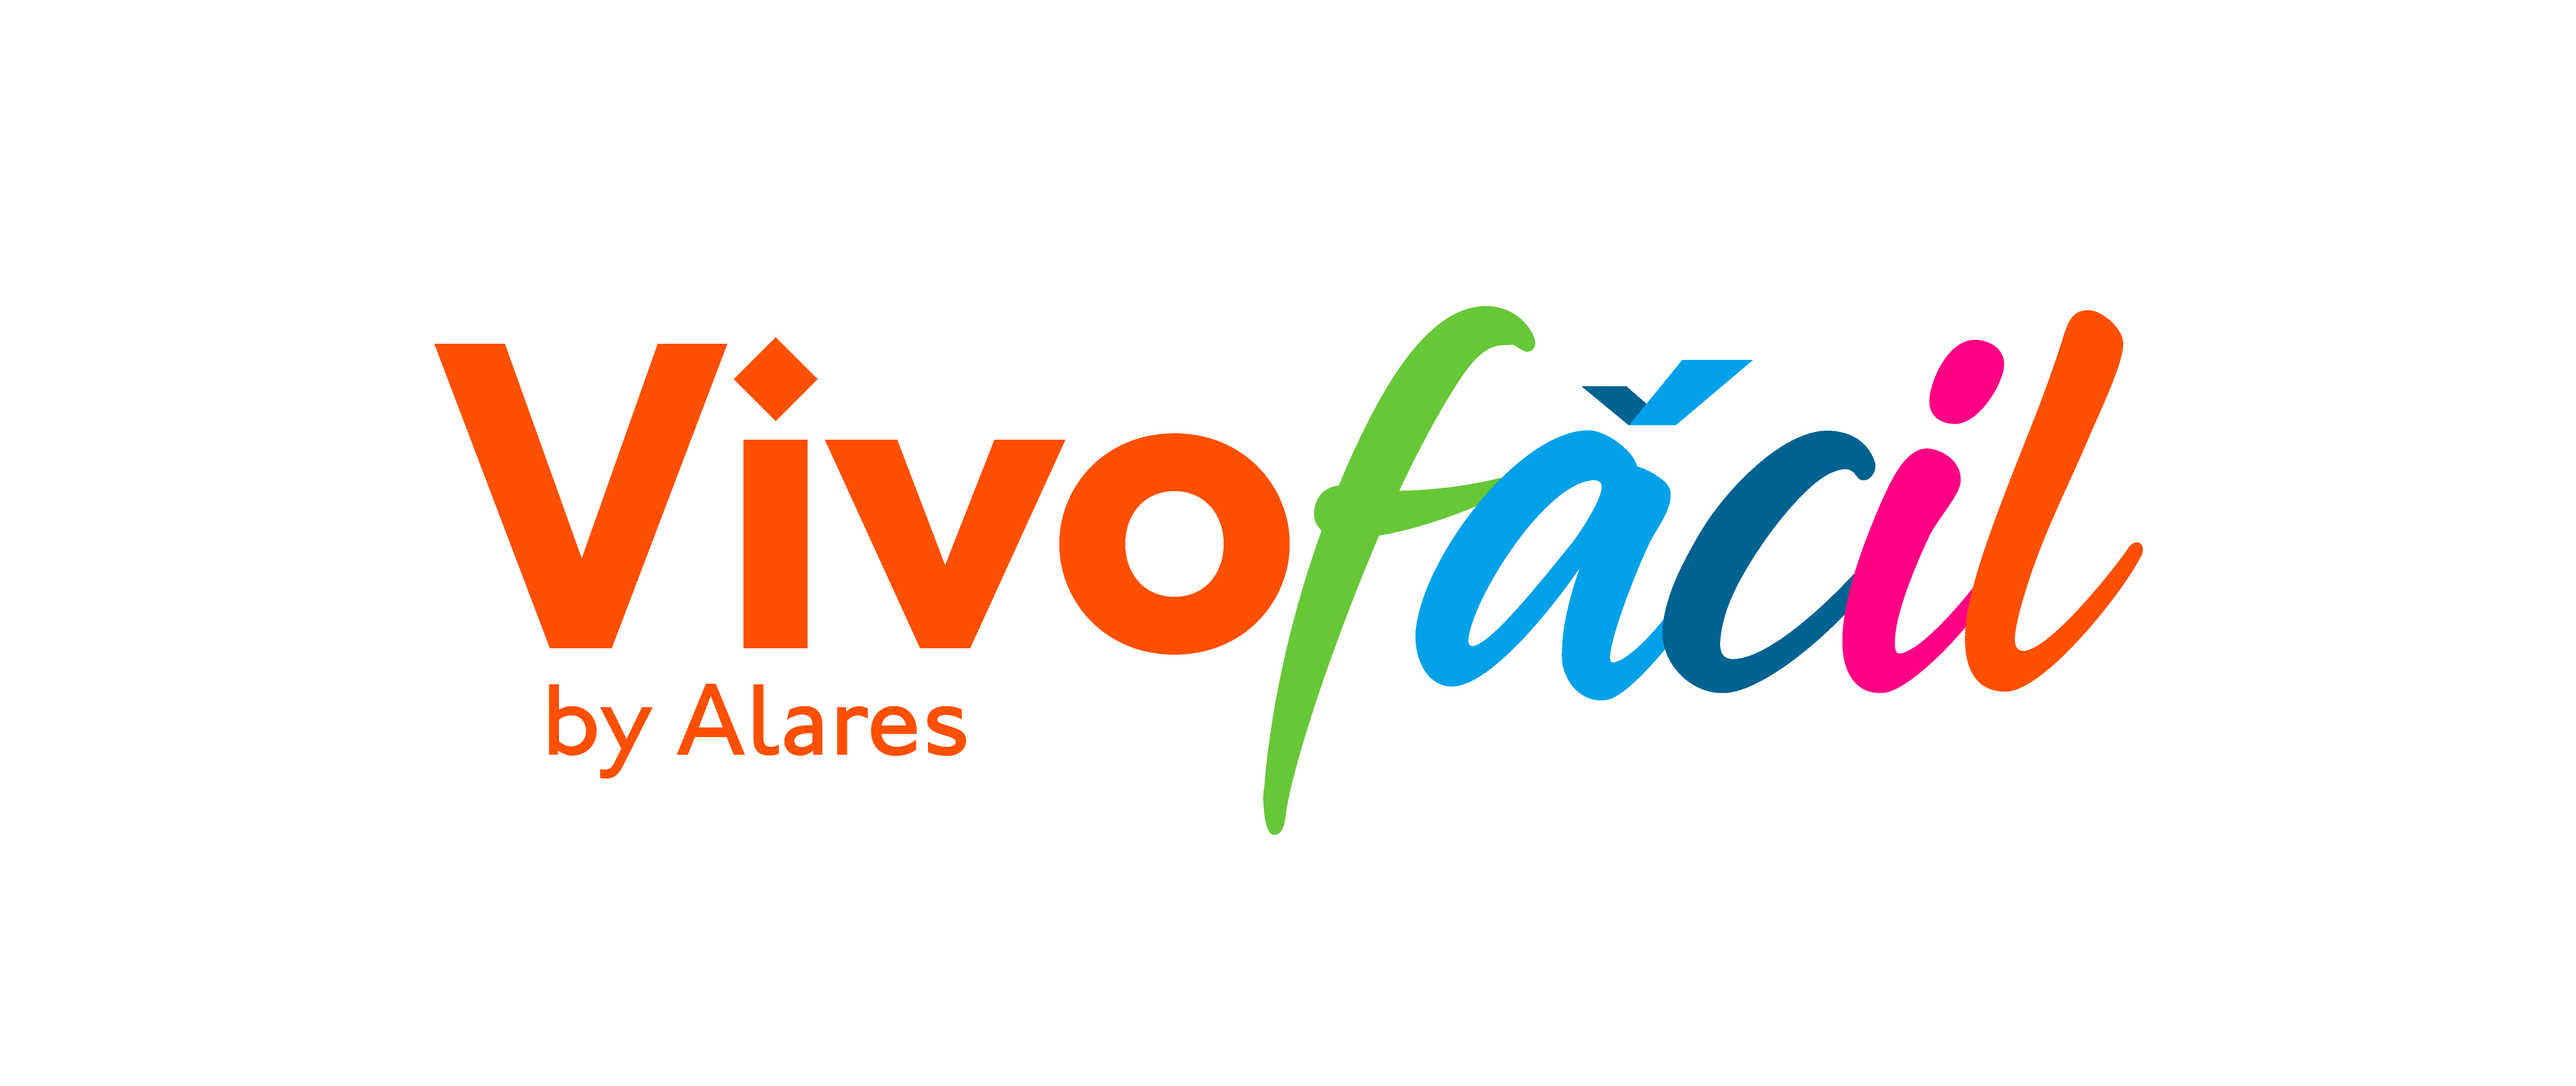 vivofacil-by-alares.png